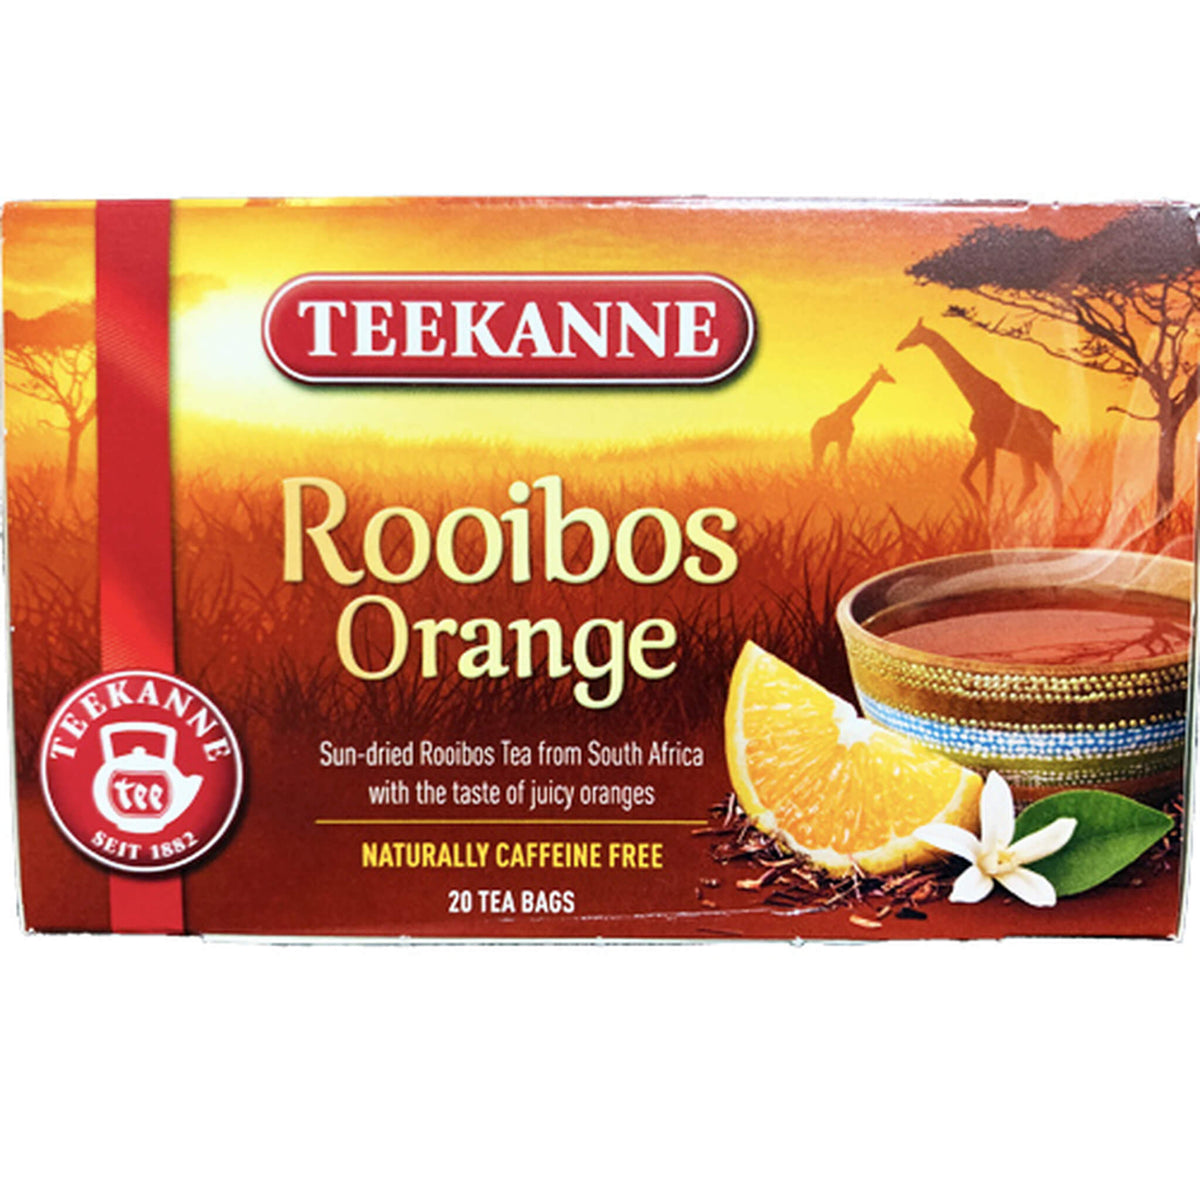 Bags) Teekanne Tea Rooibos Orange Food – International Tea (20 35g Shop